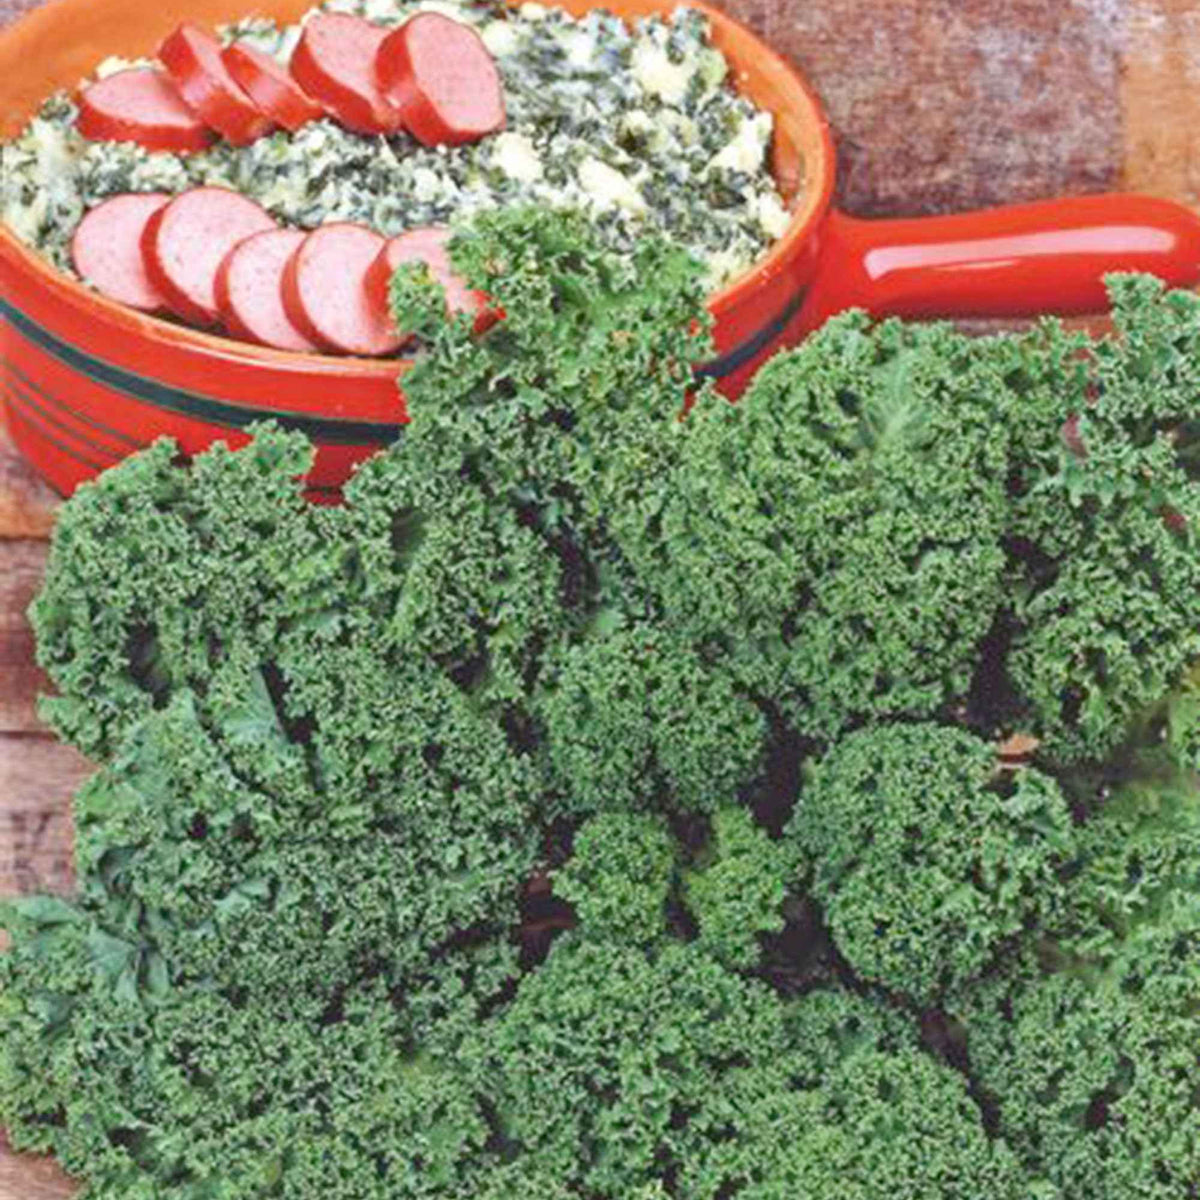 Chou frisé d'automne tardif Westlandse Herfst Kale - Brassica oleracea sabauda westlandse herfst kale - Graines de fruits et légumes